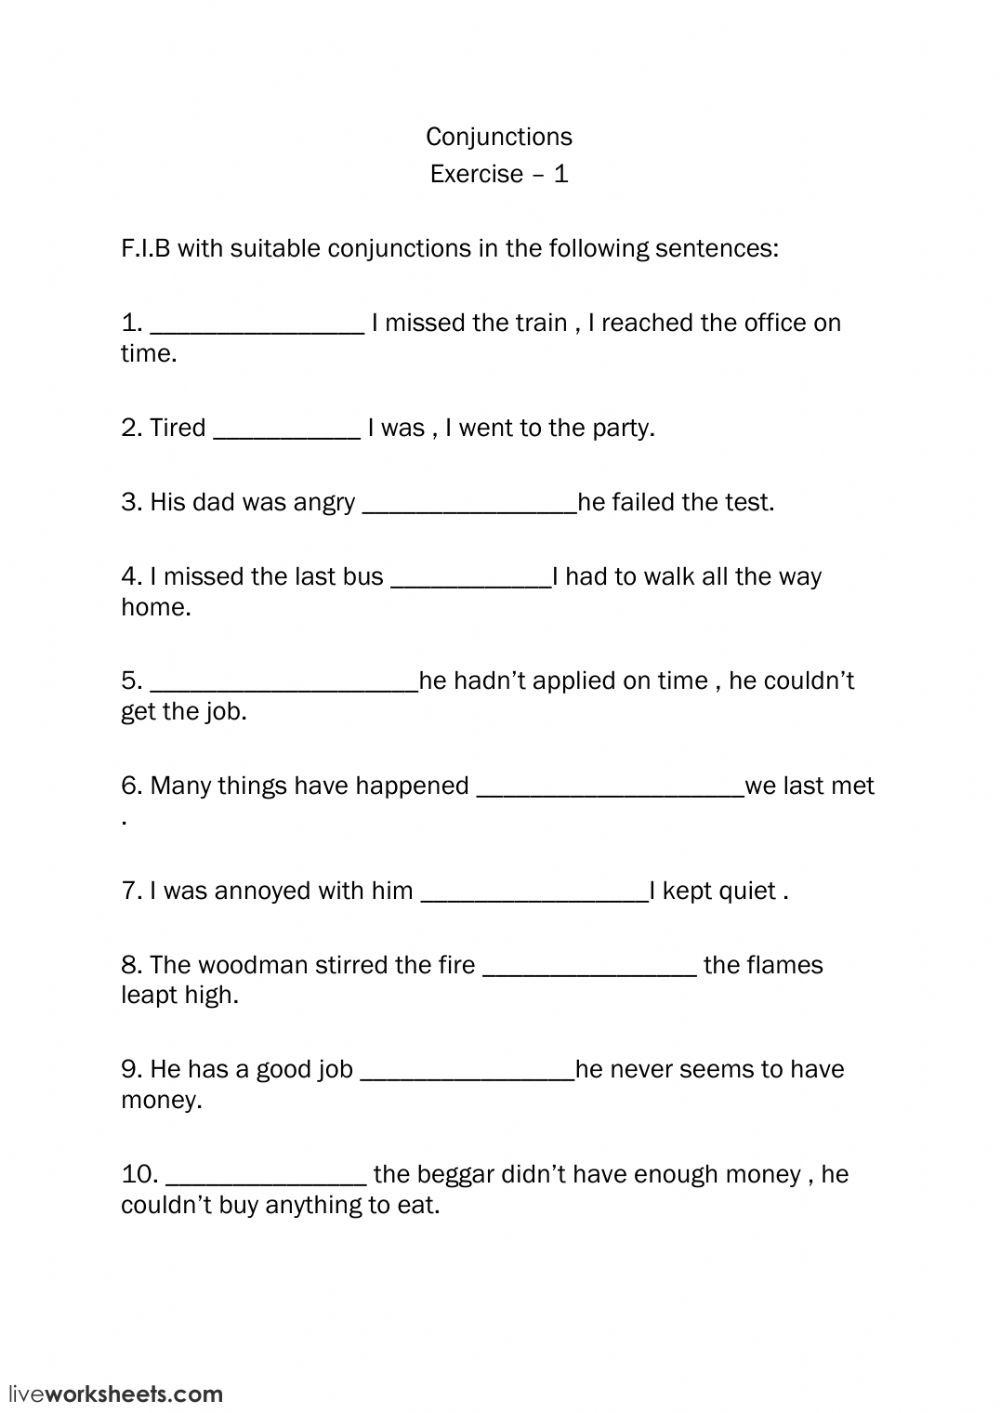 Conjunctions Worksheets for Grade 3 Conjunctions Interactive Worksheet